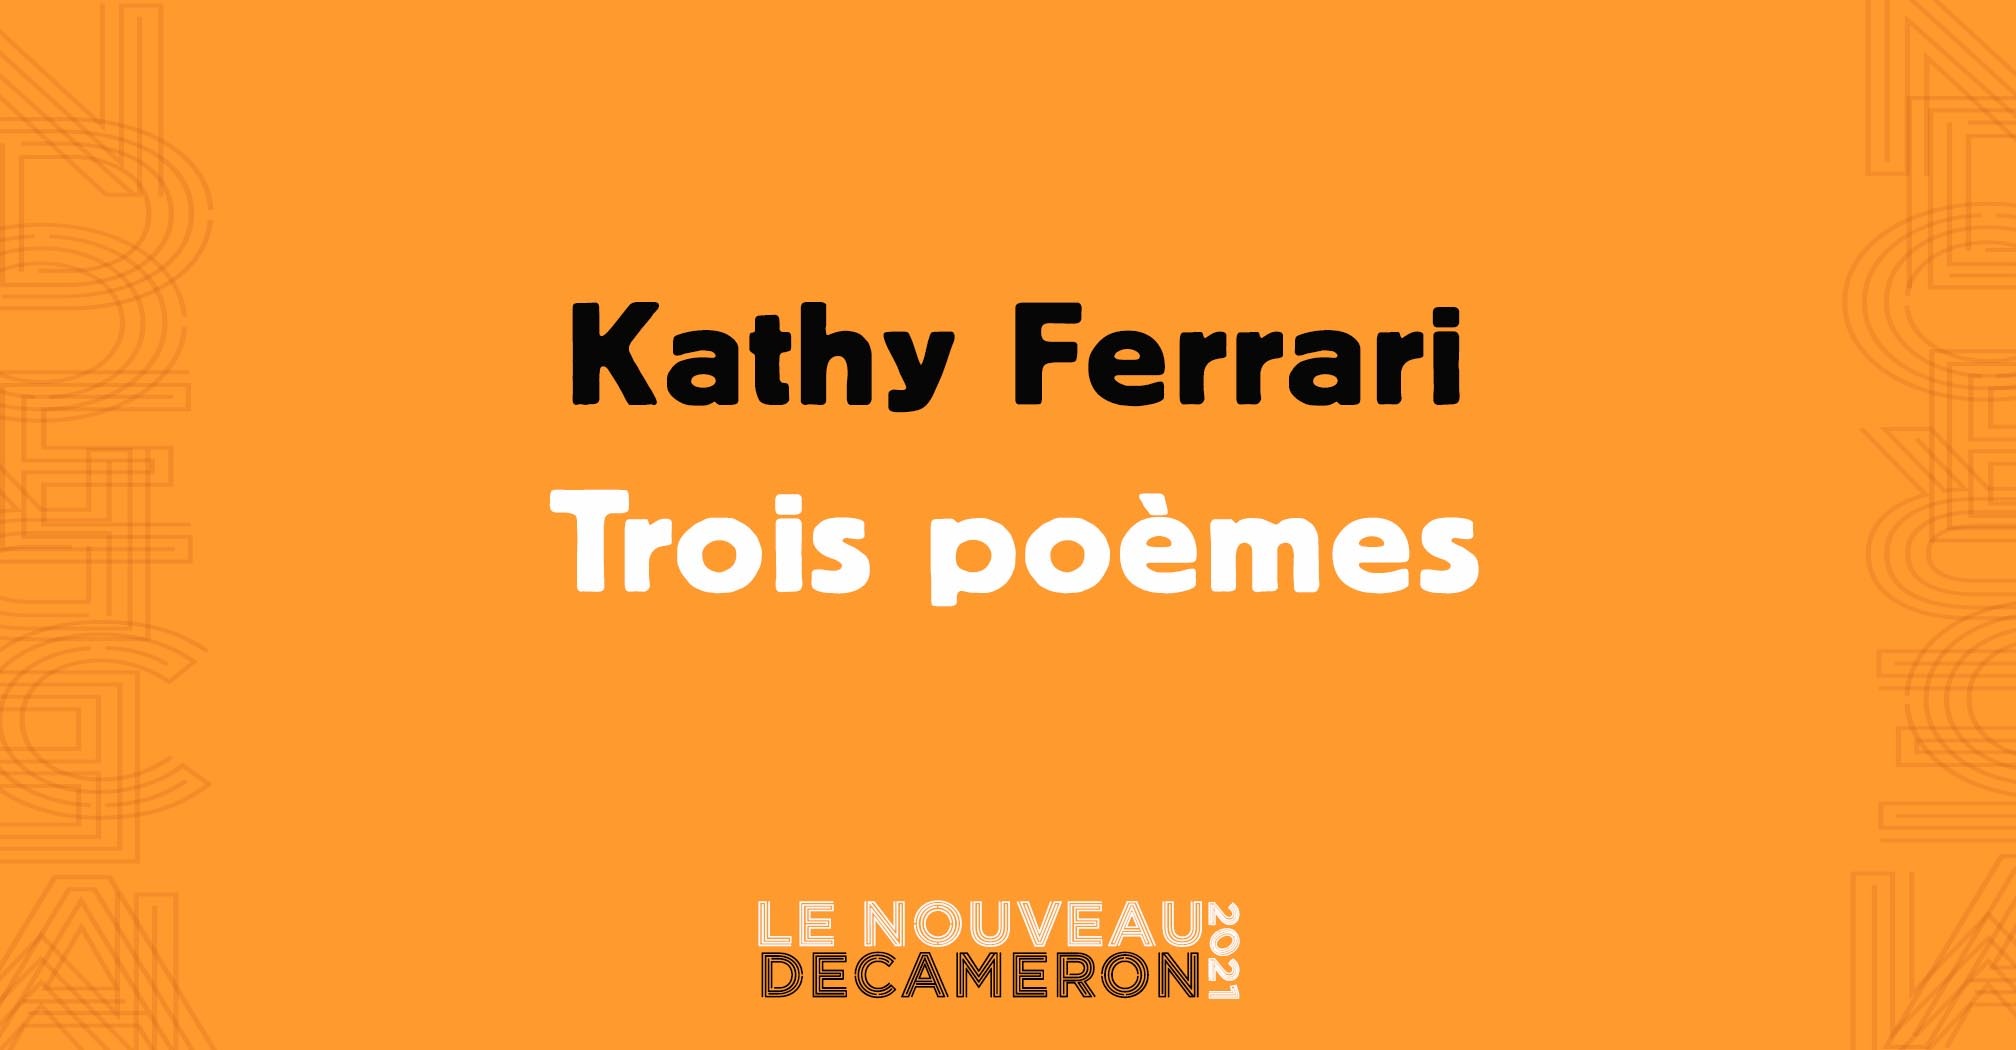 Kathy Ferrari - Trois poèmes